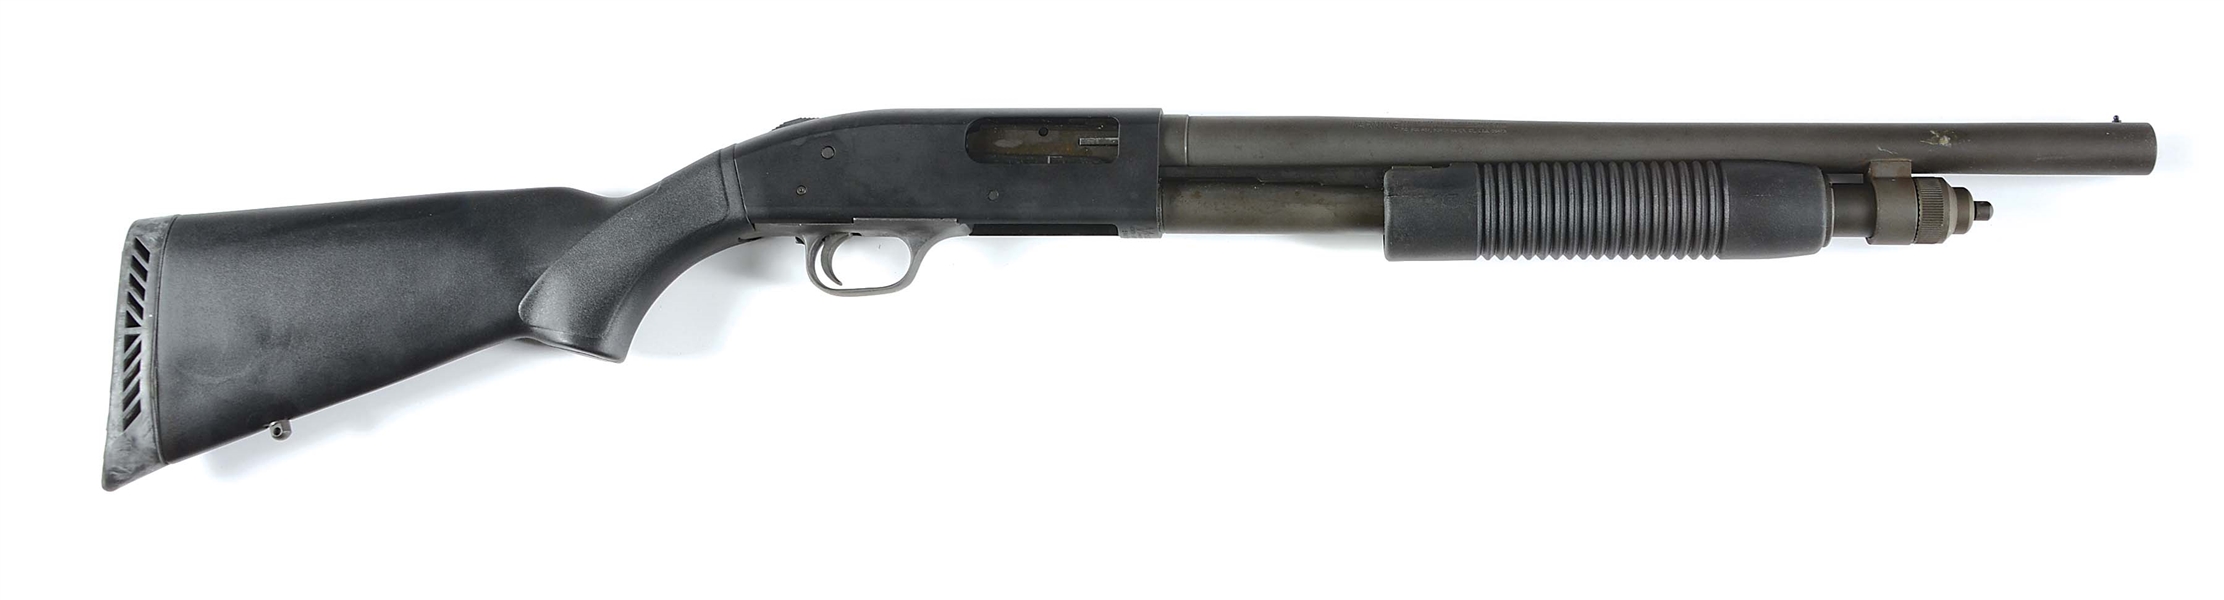 (M) MOSSBERG M590A1 PUMP-ACTION SHOTGUN.